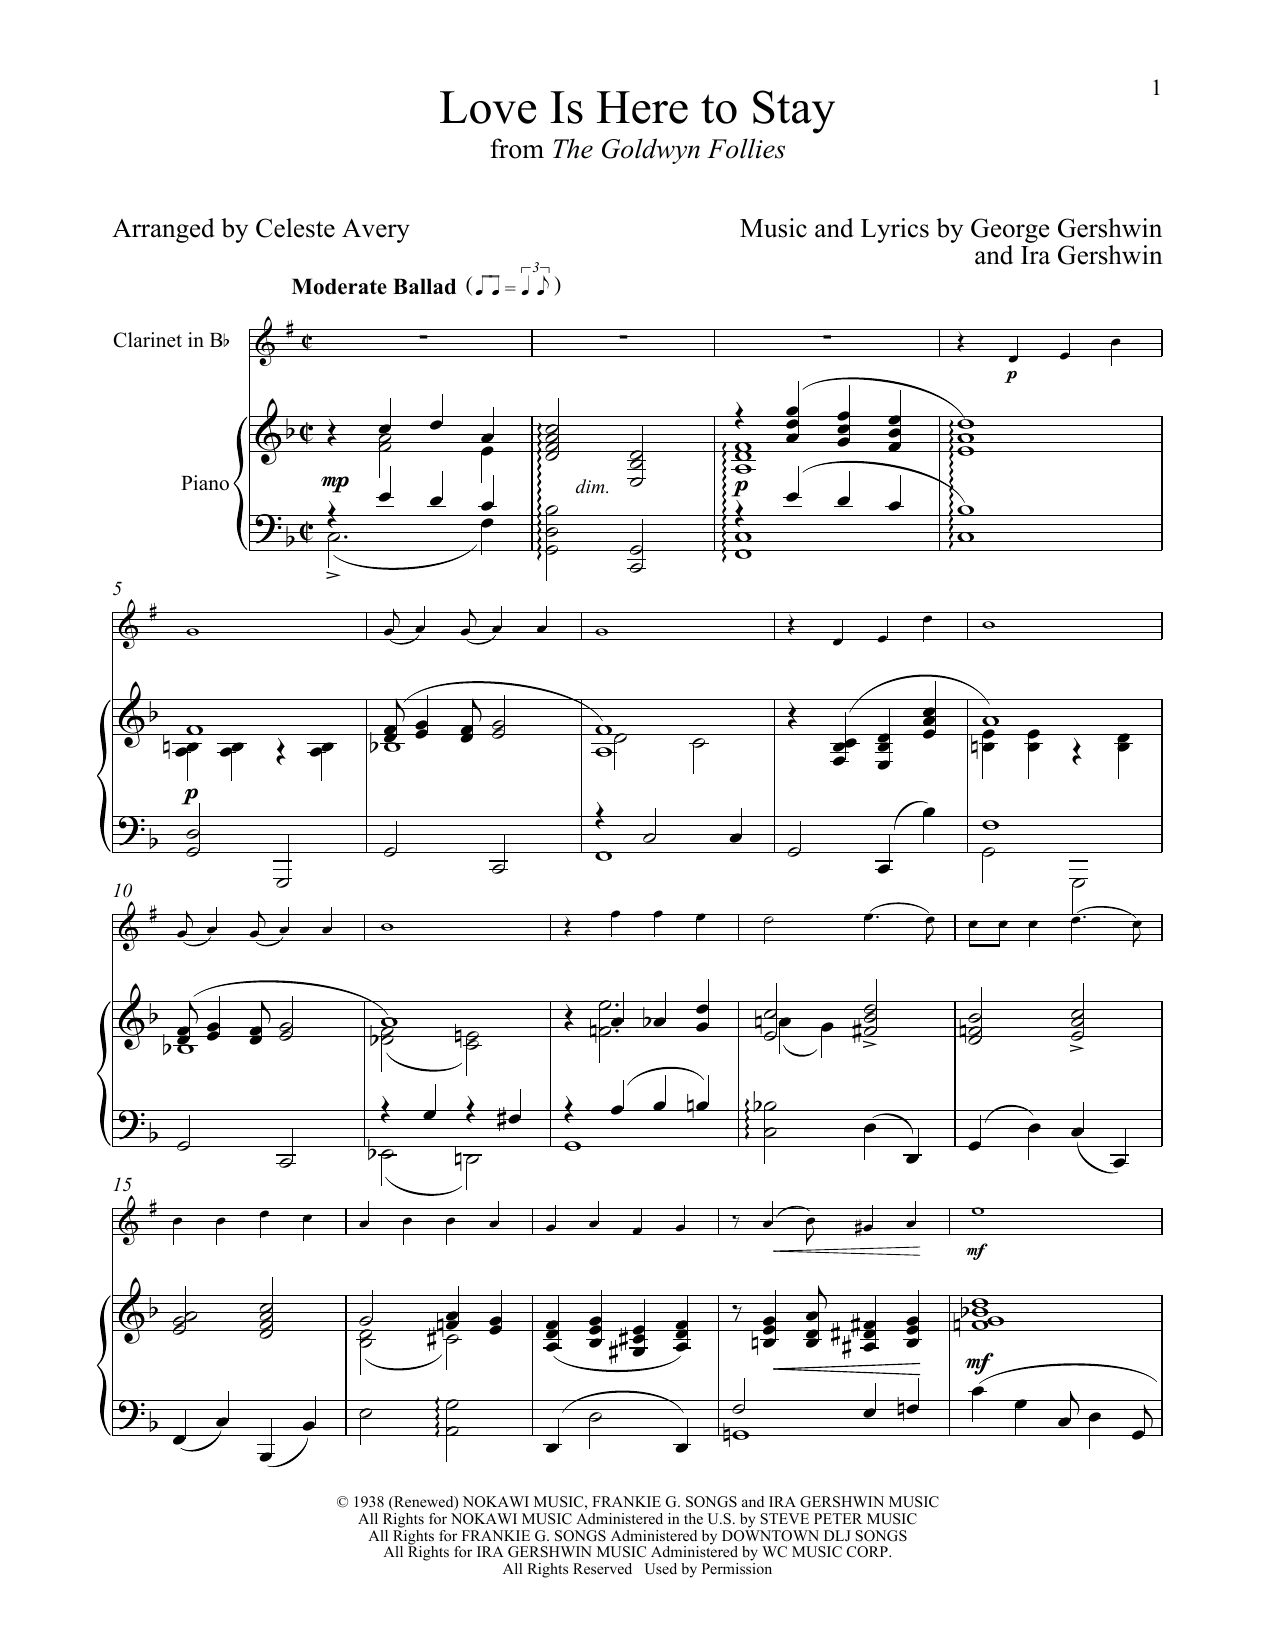 Download George Gershwin & Ira Gershwin Love Is Here To Stay (from The Goldwyn Sheet Music